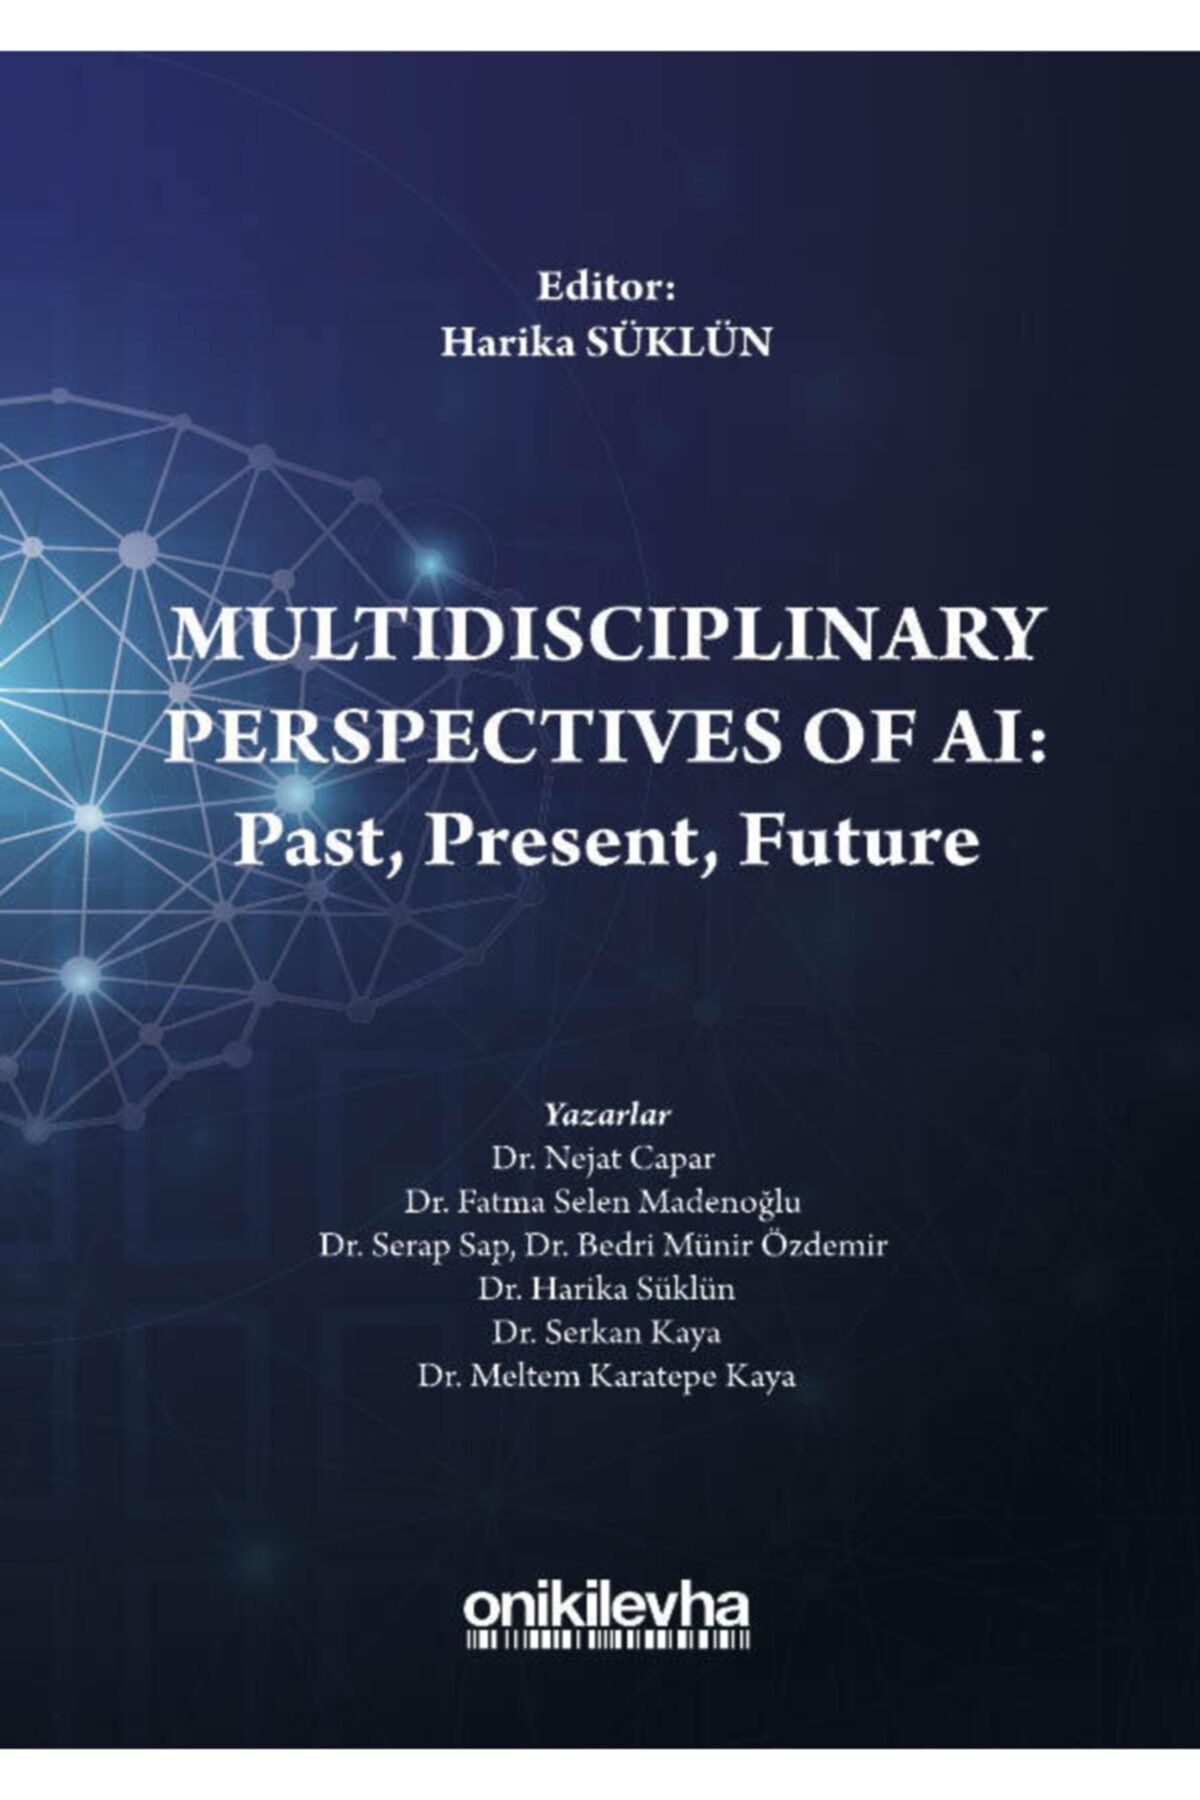 On İki Levha Yayıncılık Multidisciplinary Perspectives Of Aı: Past, Present, Future